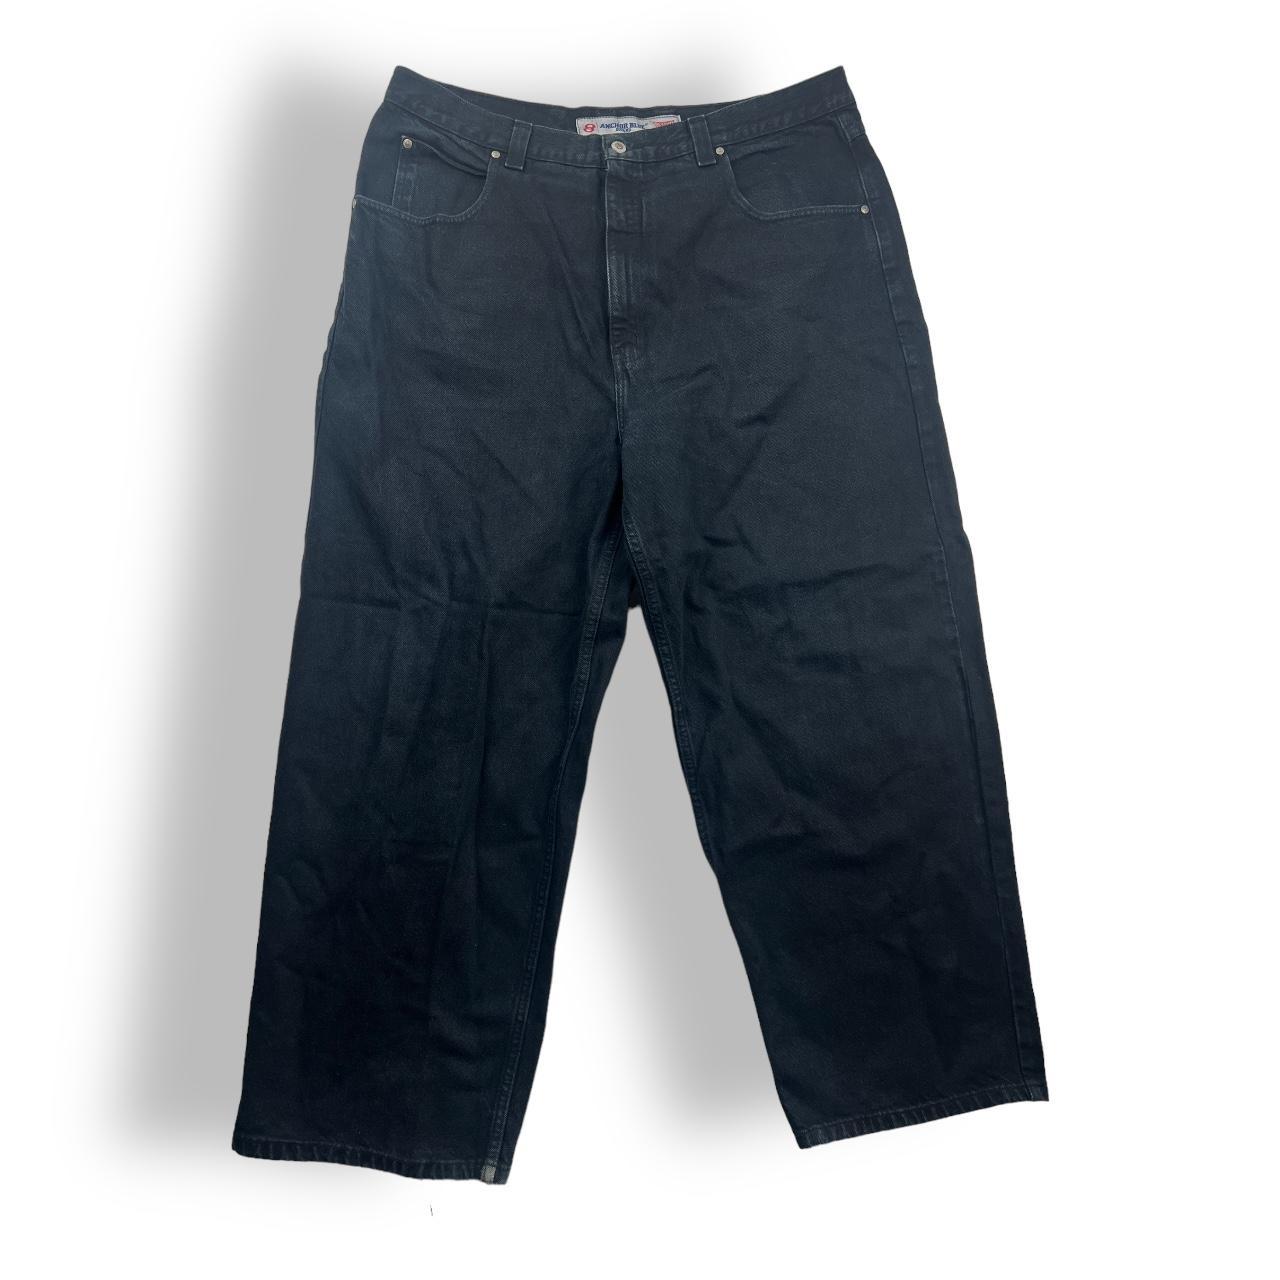 Anchor Blue Men's Navy Jeans